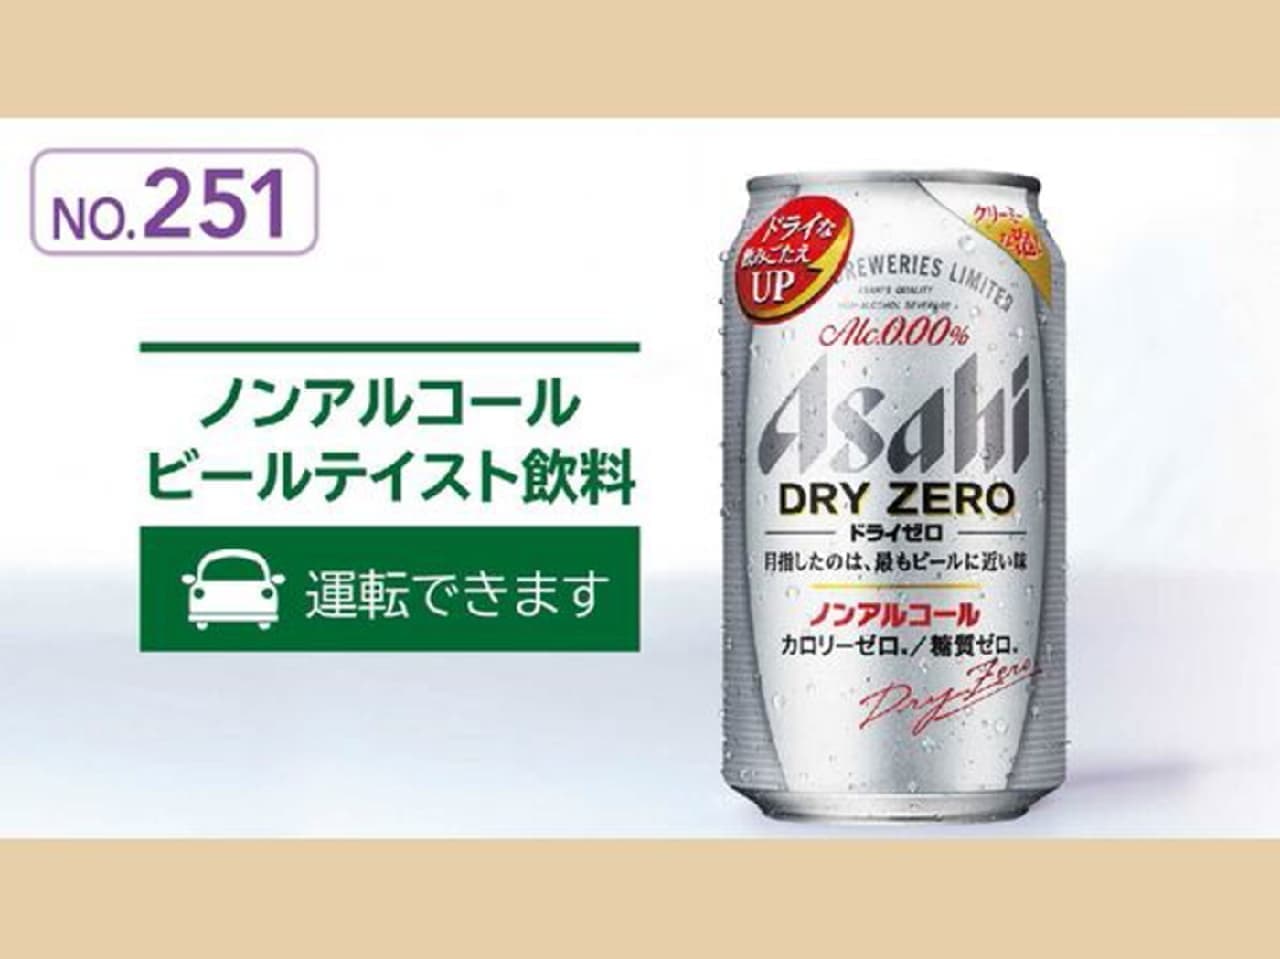 Gusto "Asahi Dry Zero